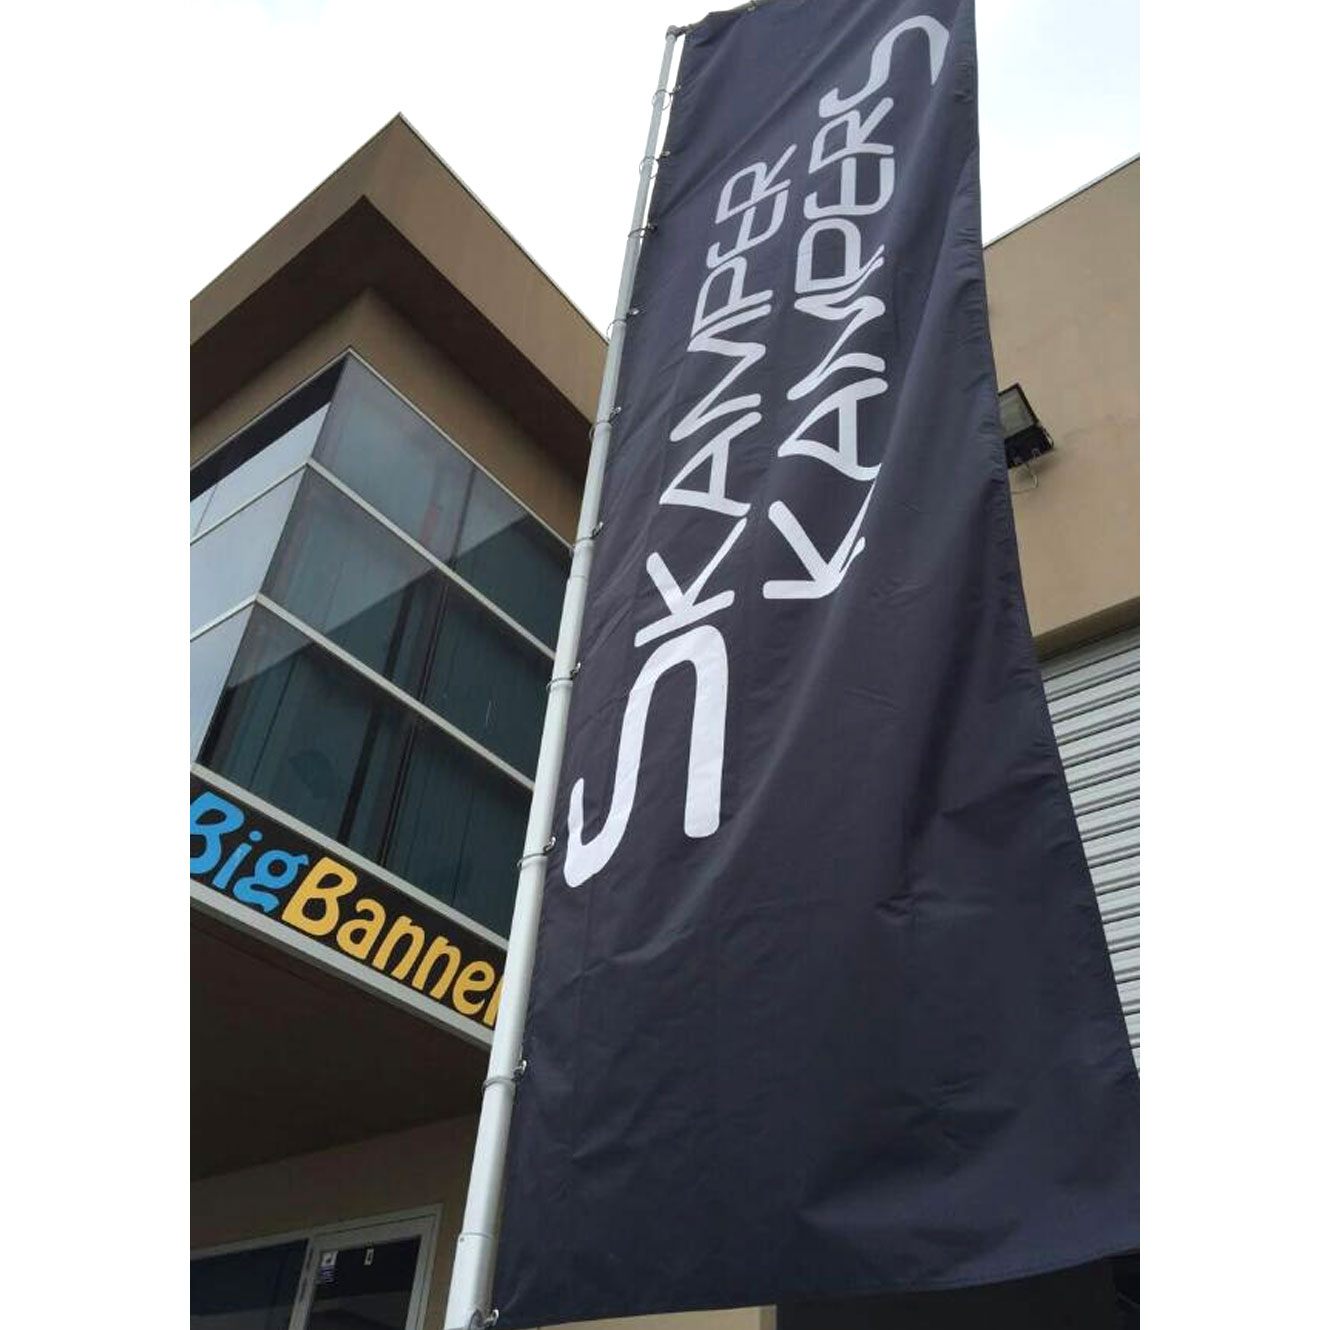 https://bigbanner.com.au/wp-content/uploads/2020/01/outdoor-giant-pole-flag-banner-4.jpg